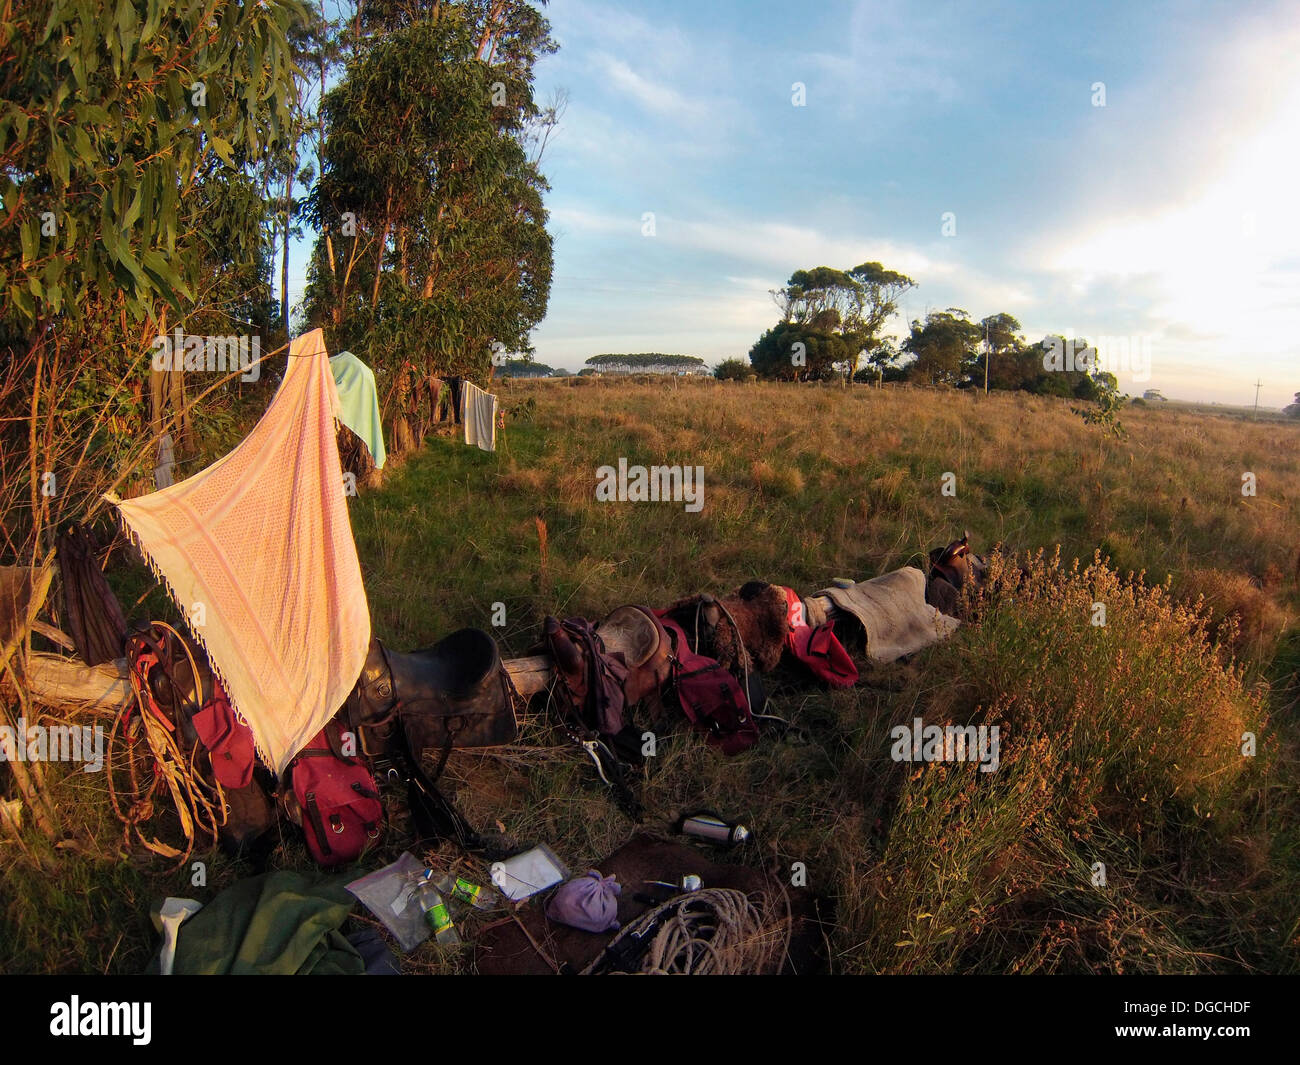 Camping equipment in field, Uruguay Stock Photo